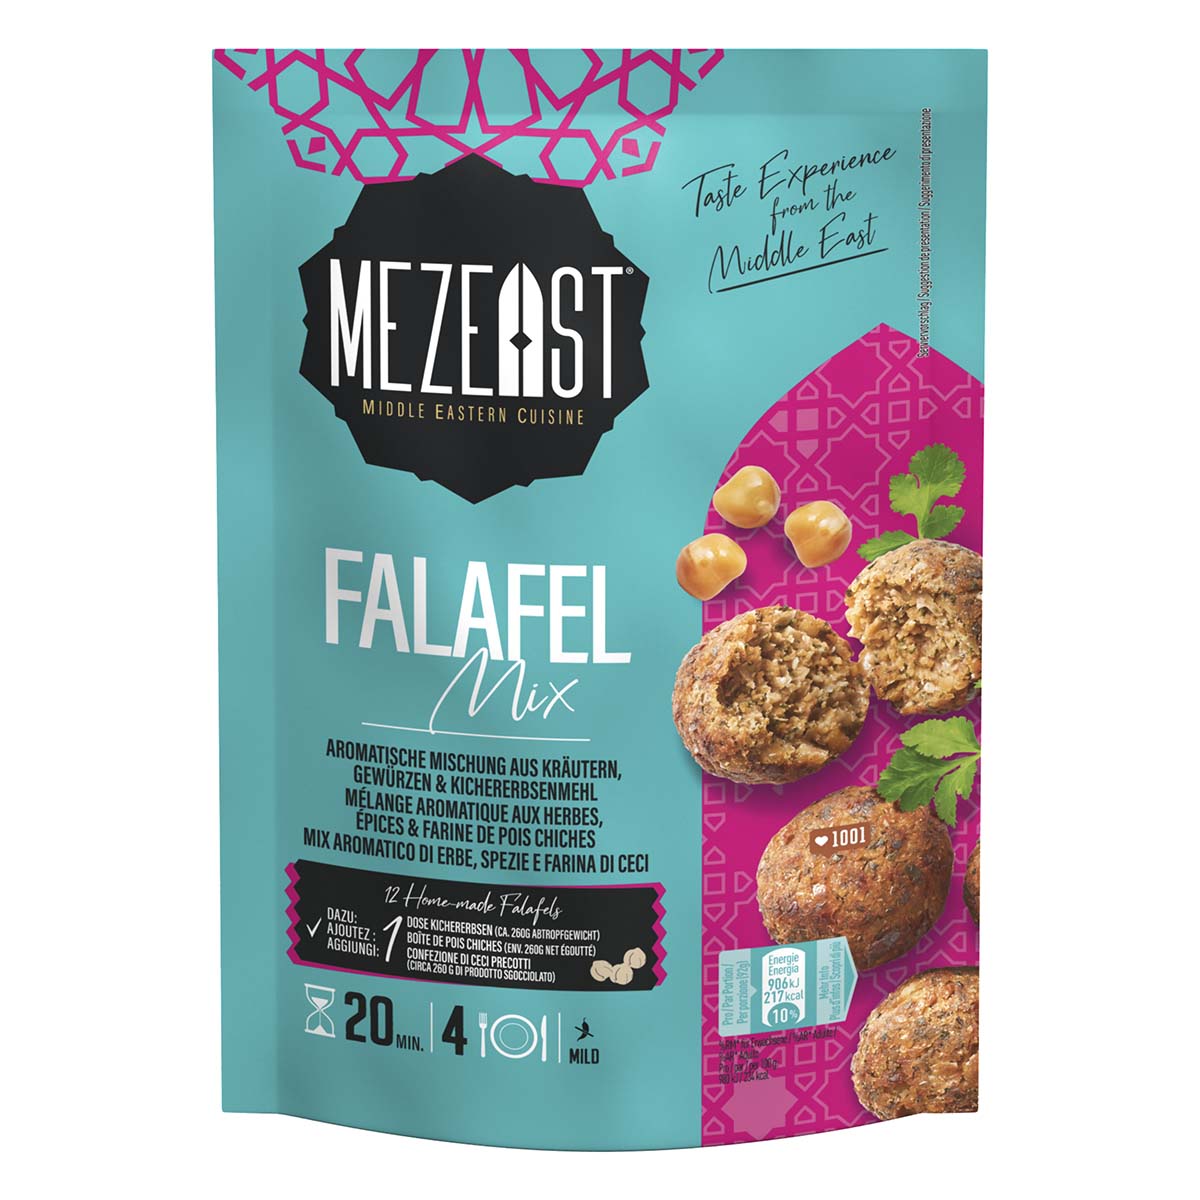 MEZEAST Falafel Mix 80g